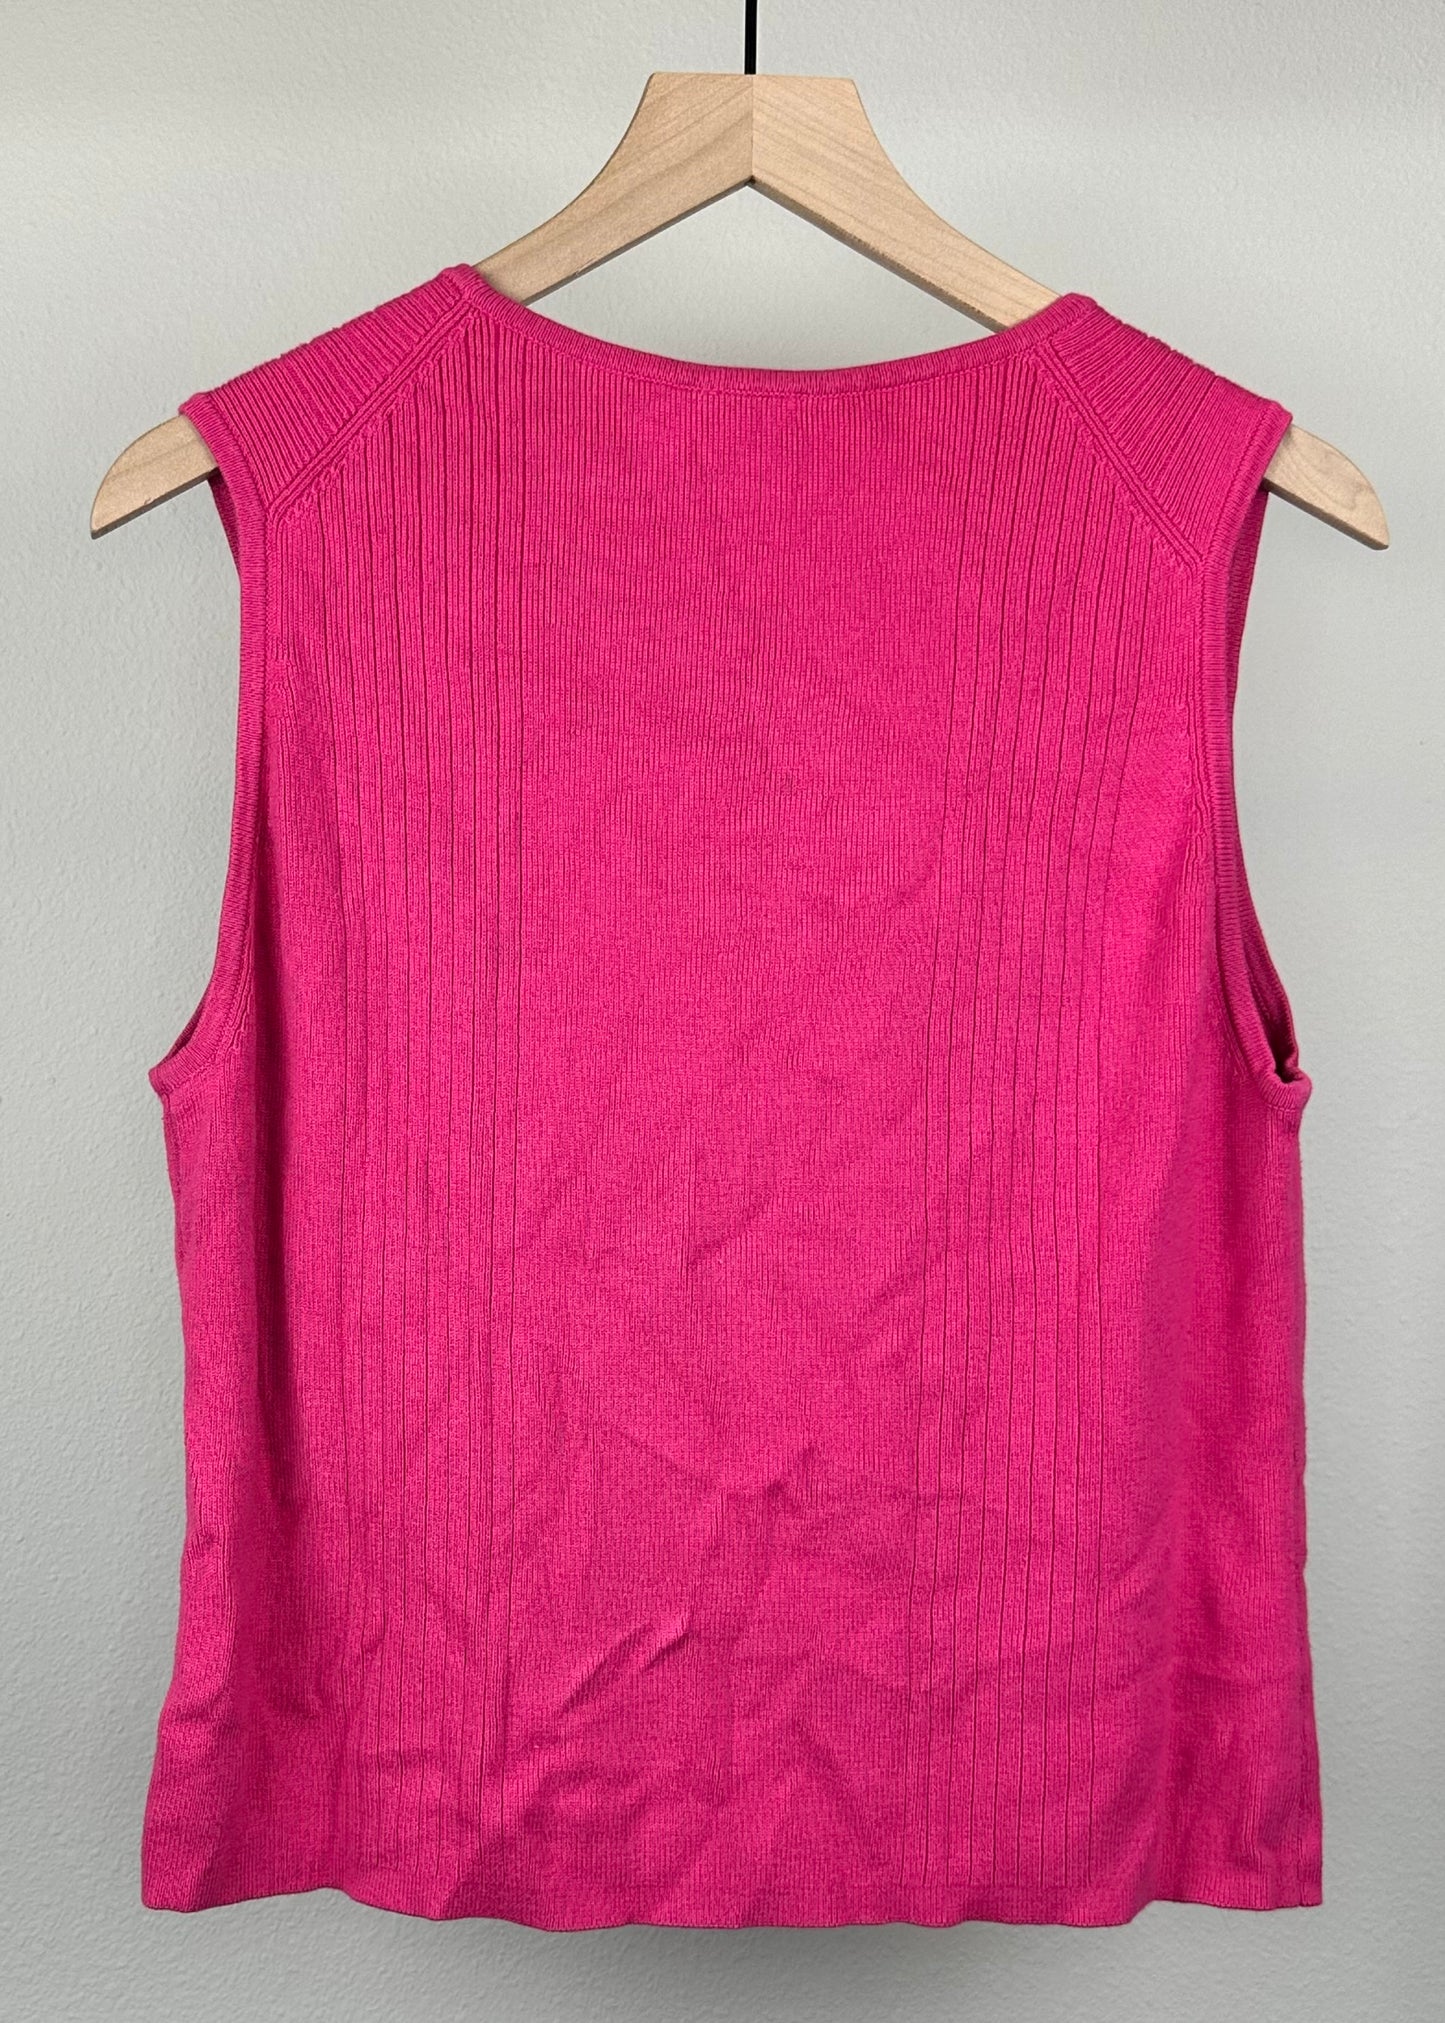 Pink Sleeveless Shirt by G Knitwear